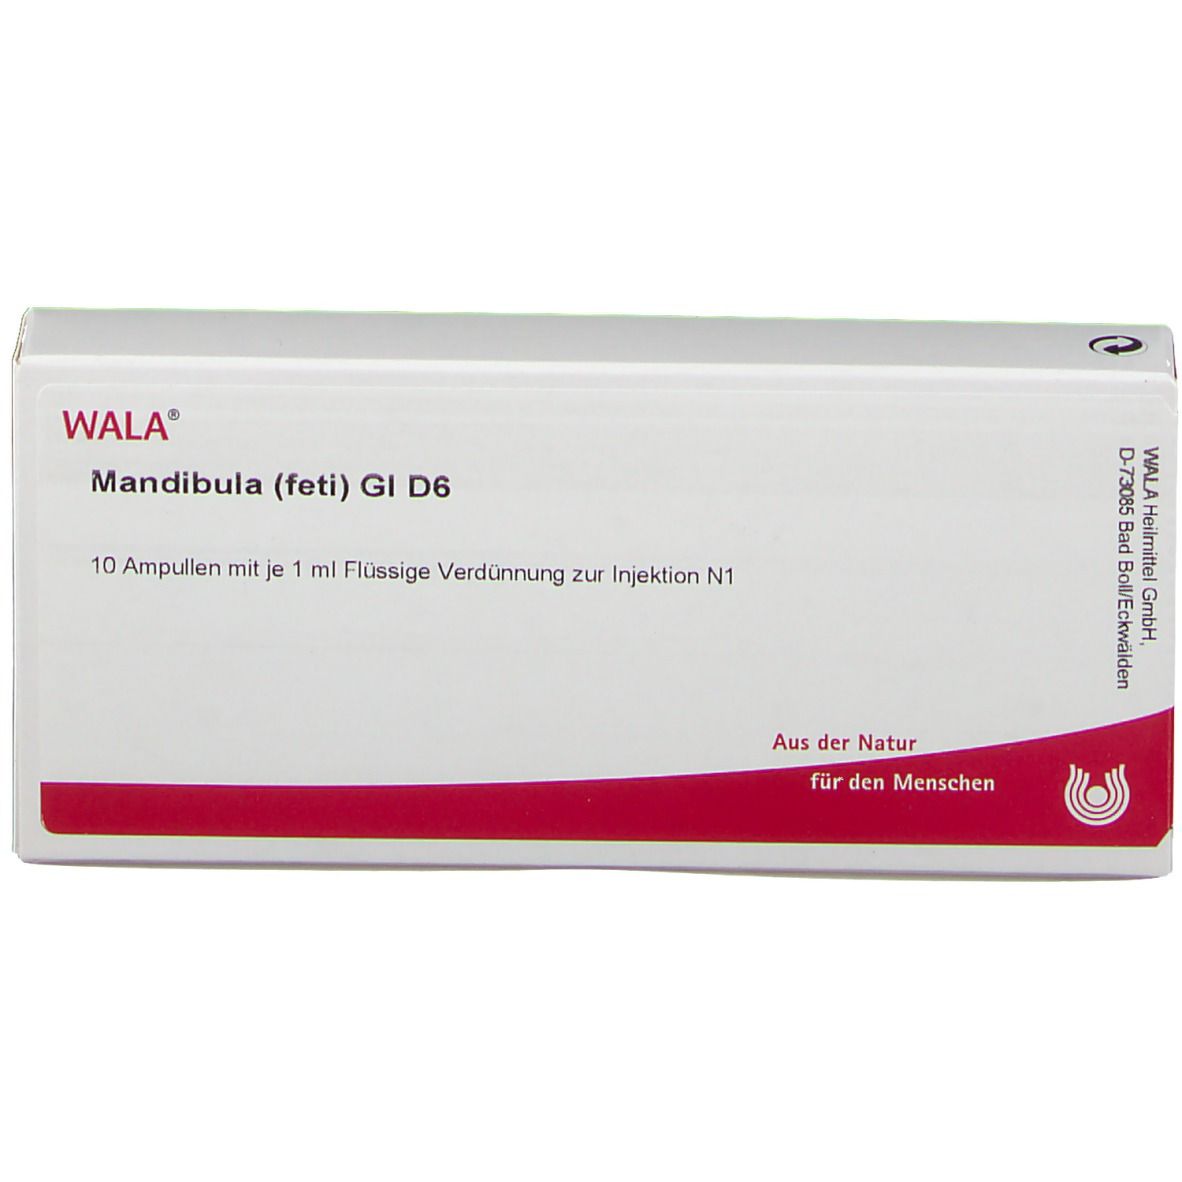 WALA® Mandibula feti Gl D 6